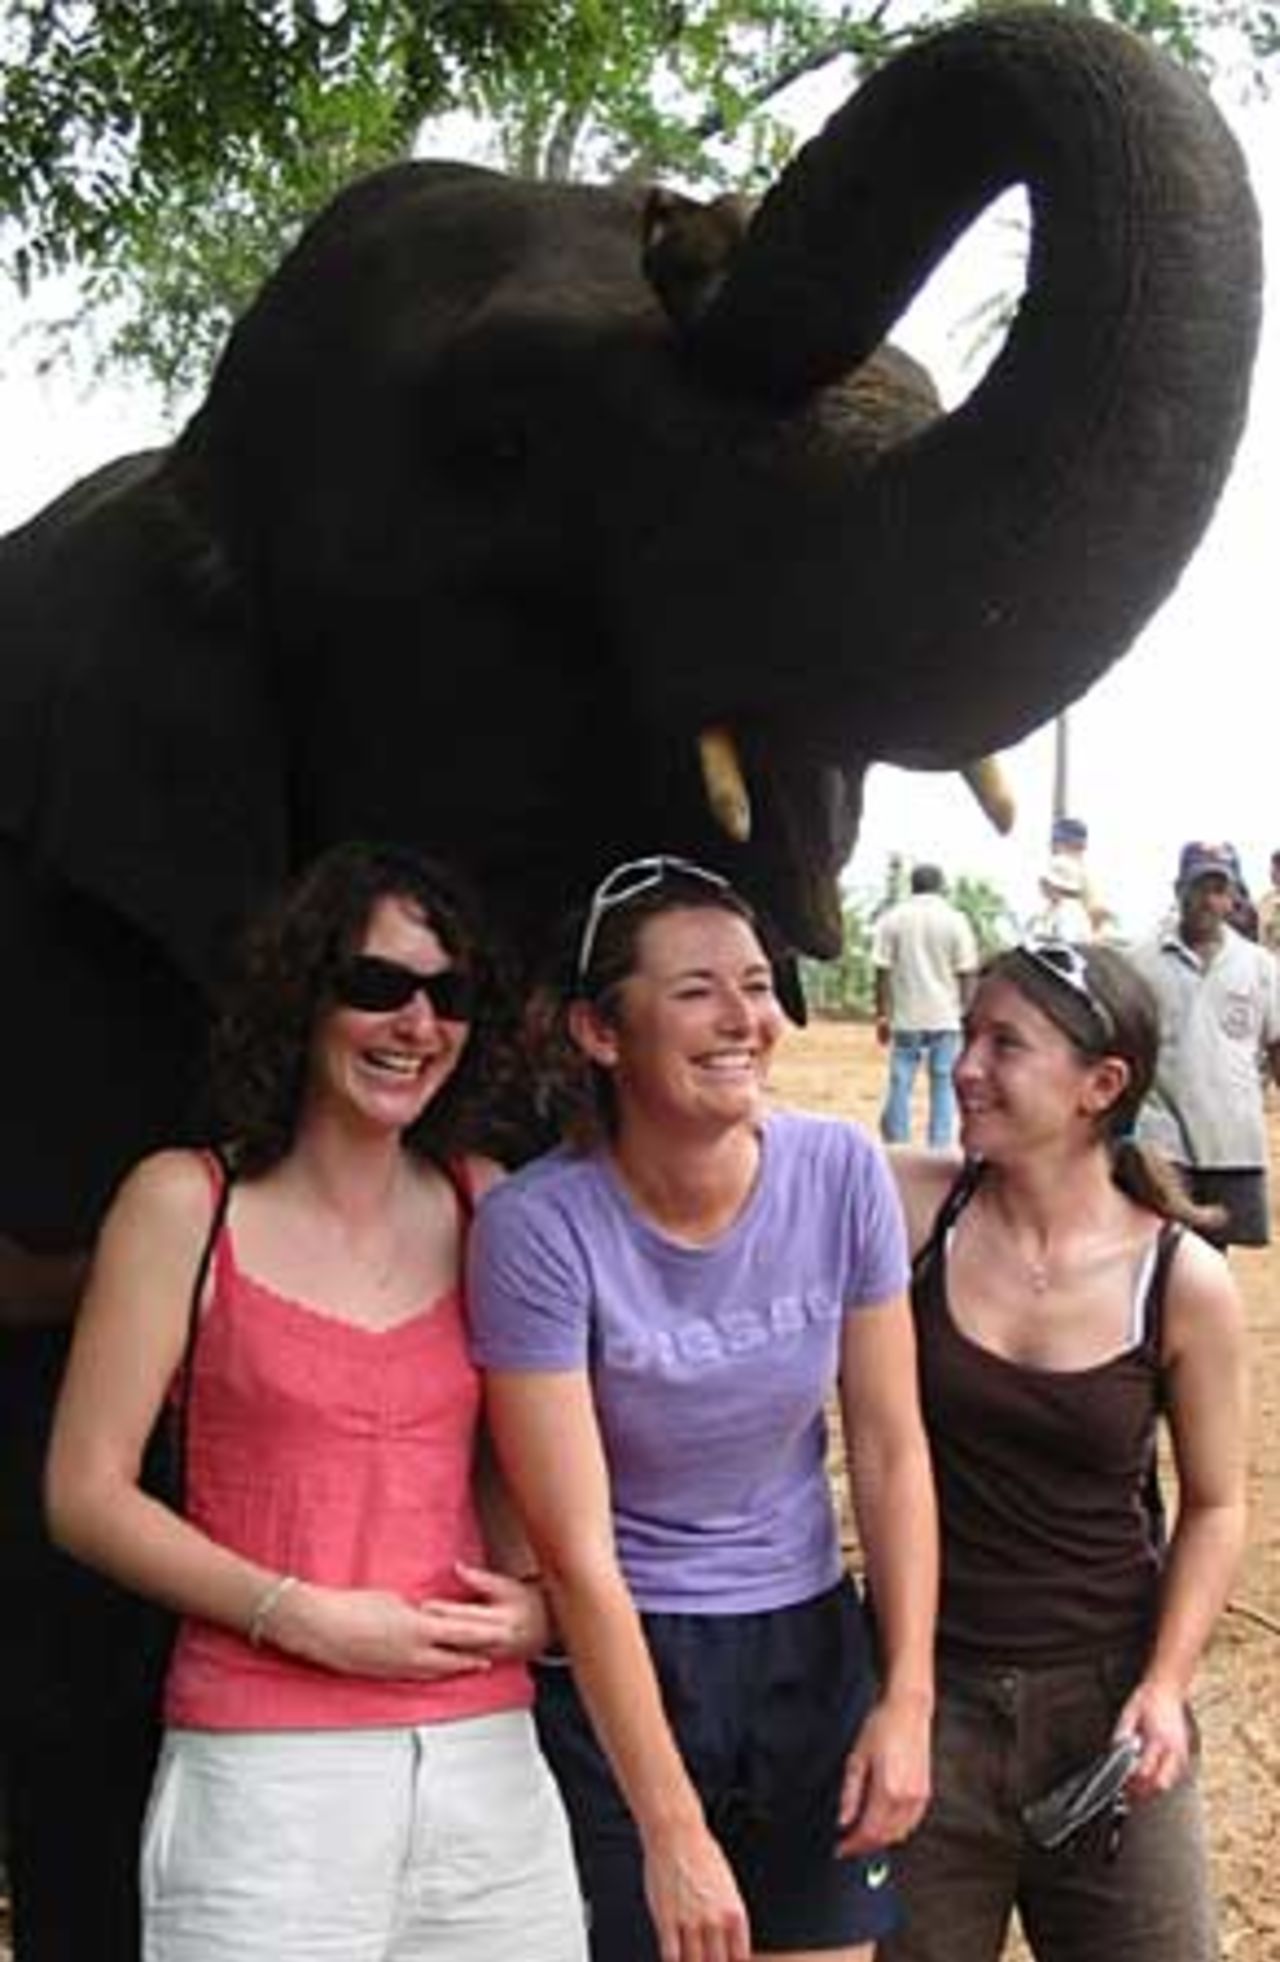 Trunk call - Imogen Gaunt, Charlotte Edwards and Jo Watts meet an elephant,  November 20, 2005